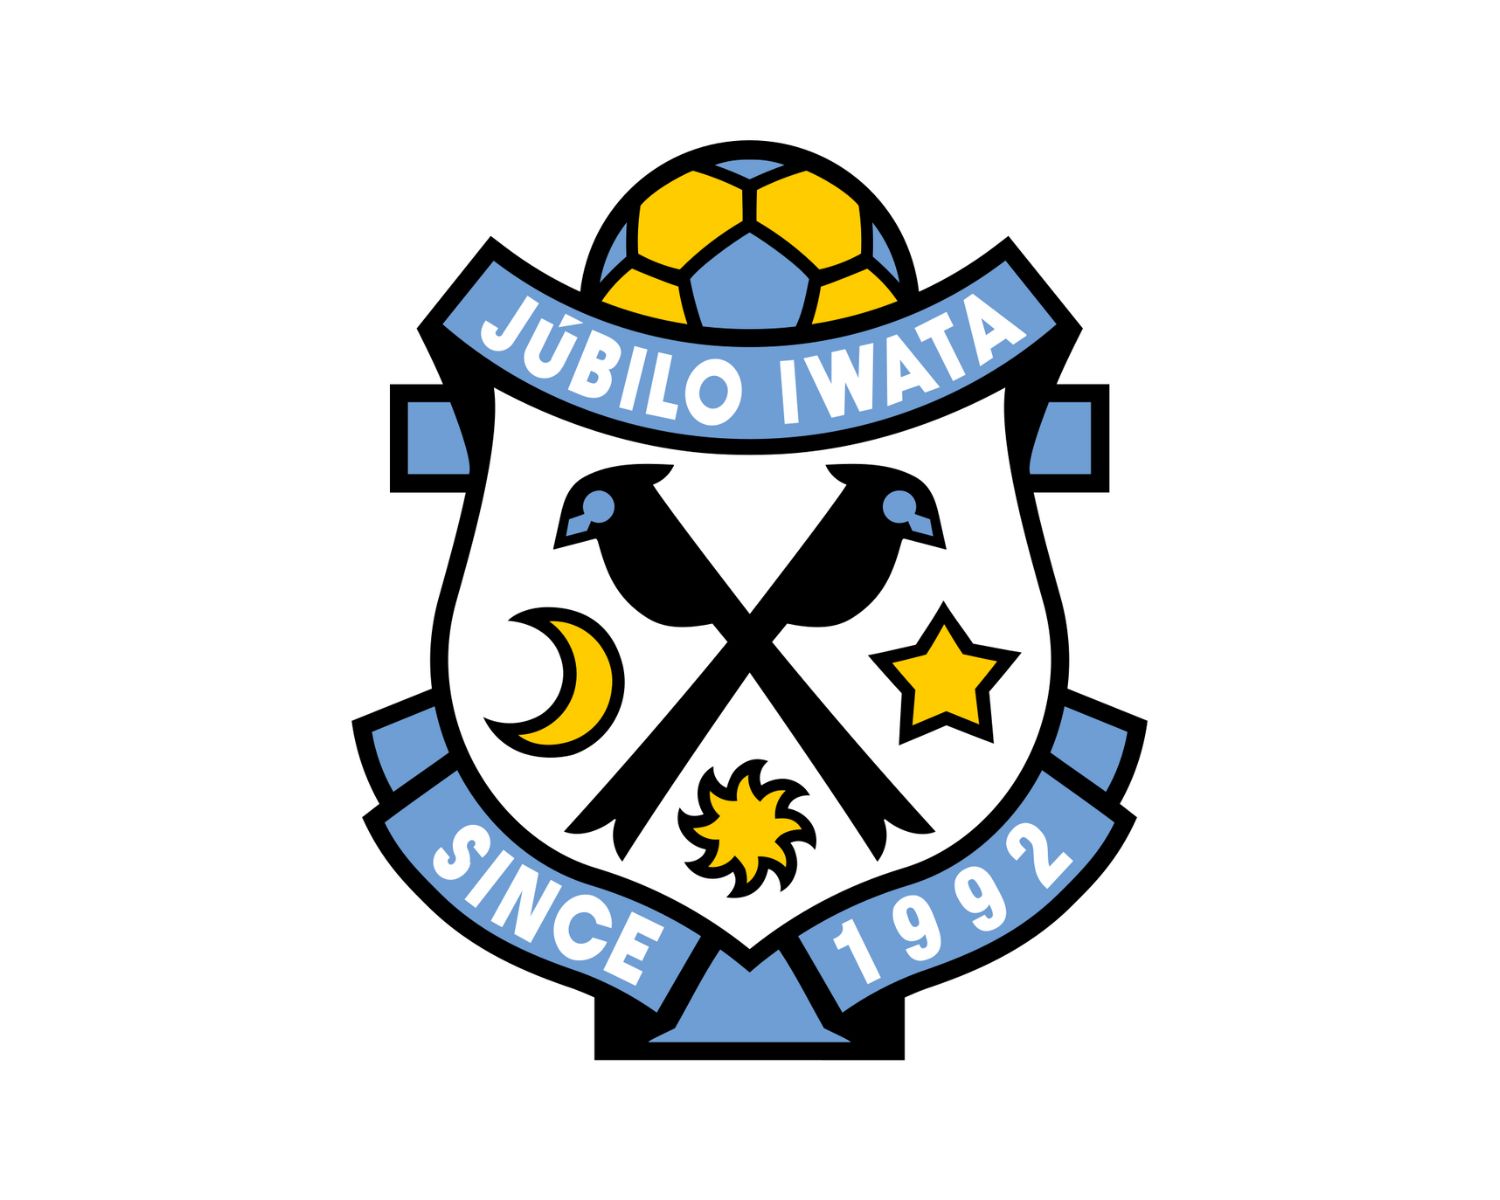 jubilo-iwata-13-football-club-facts